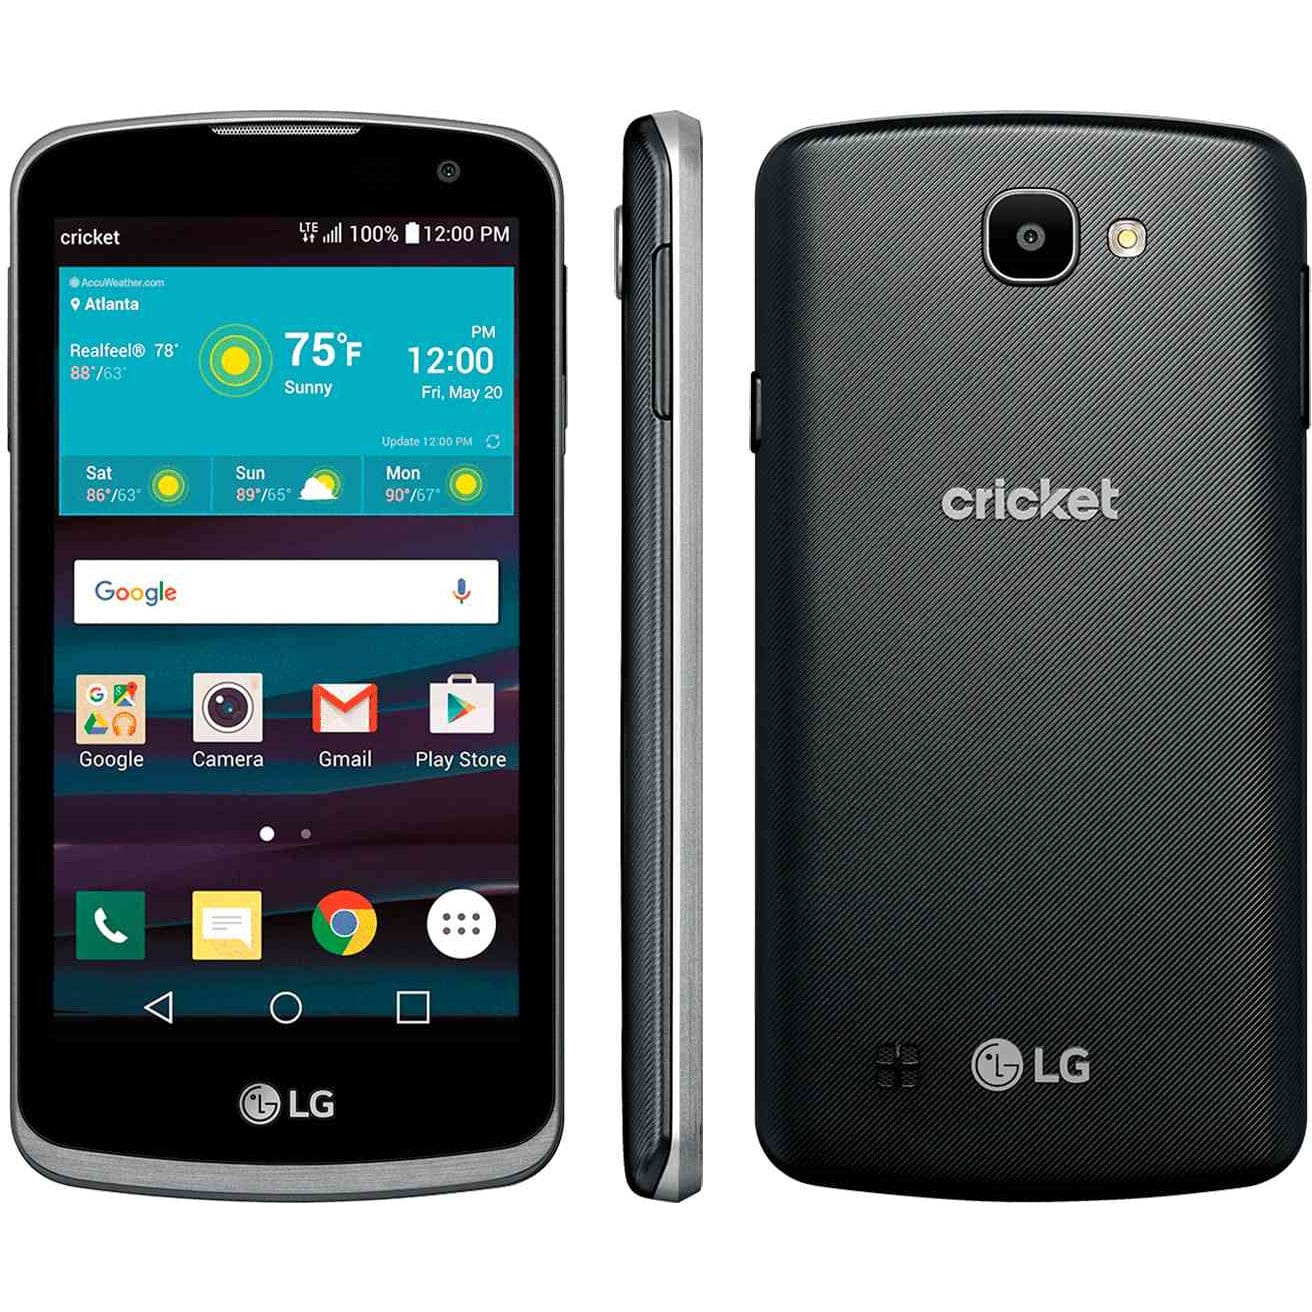 Cricket LG Spree - Black - Mobile Cell-Phone - Prepaid